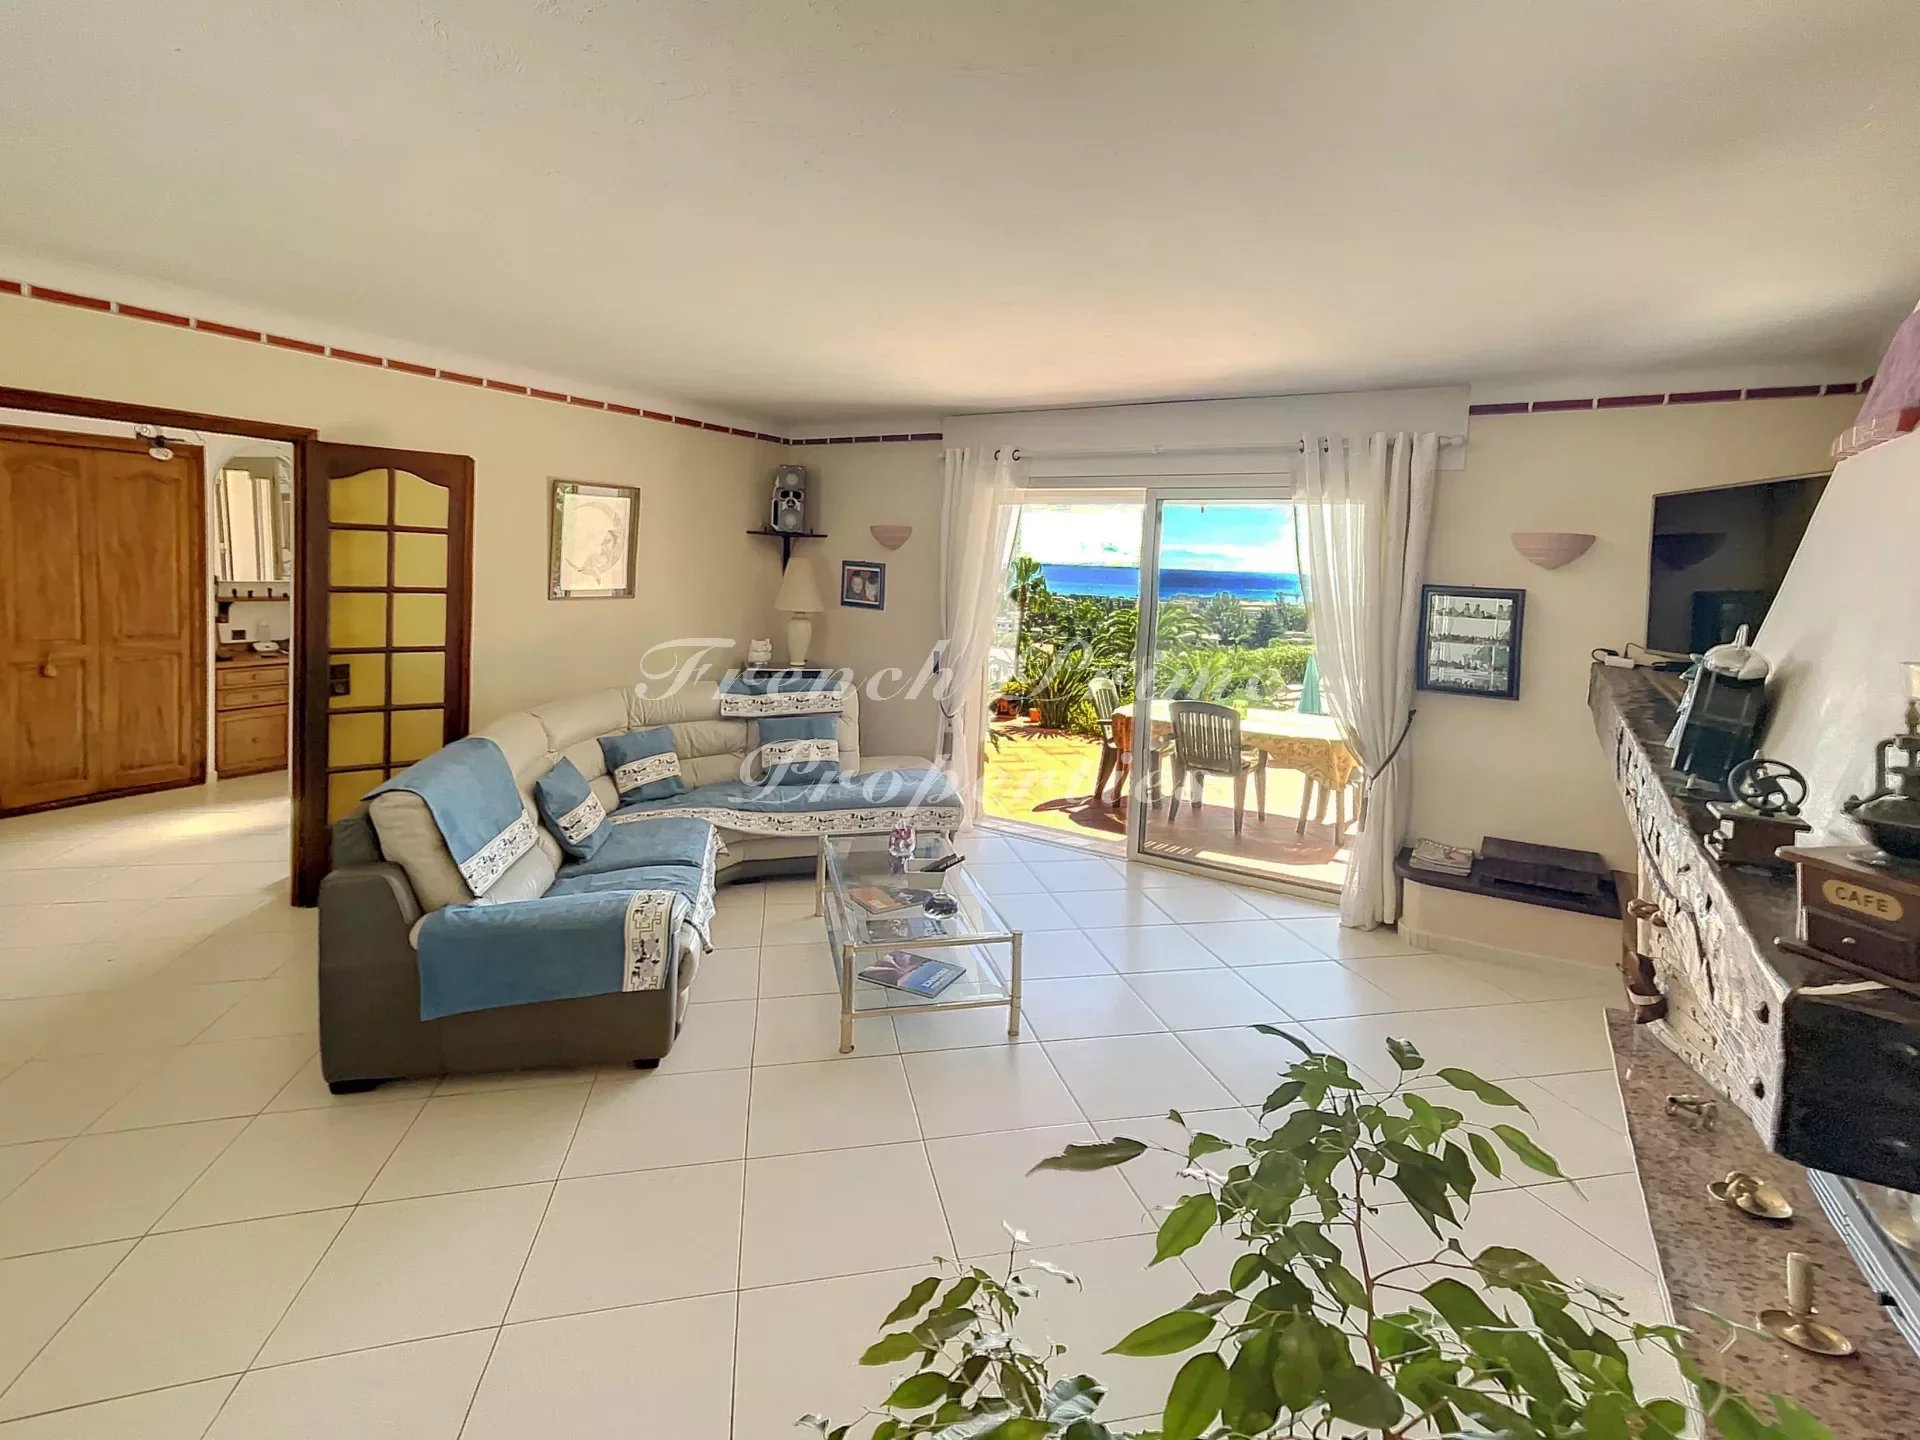 annonce Ventes Antibes vue mer panoramique villa 5/6p 240m² terrain plat 1300m² piscine calme